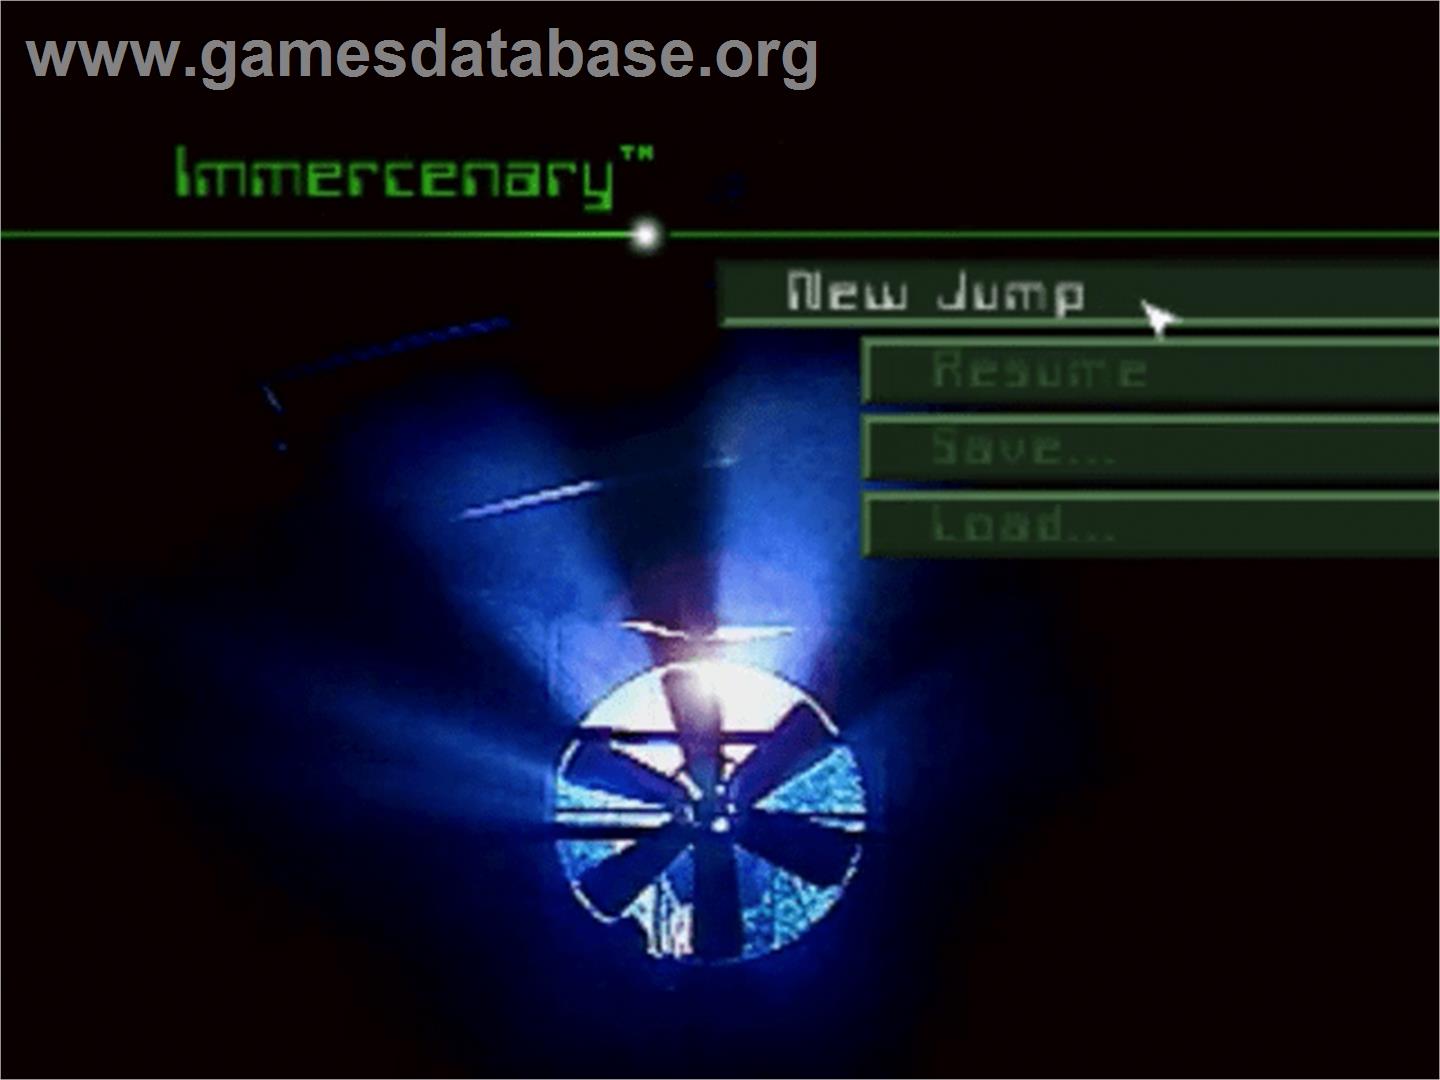 Immercenary - Panasonic 3DO - Artwork - Title Screen